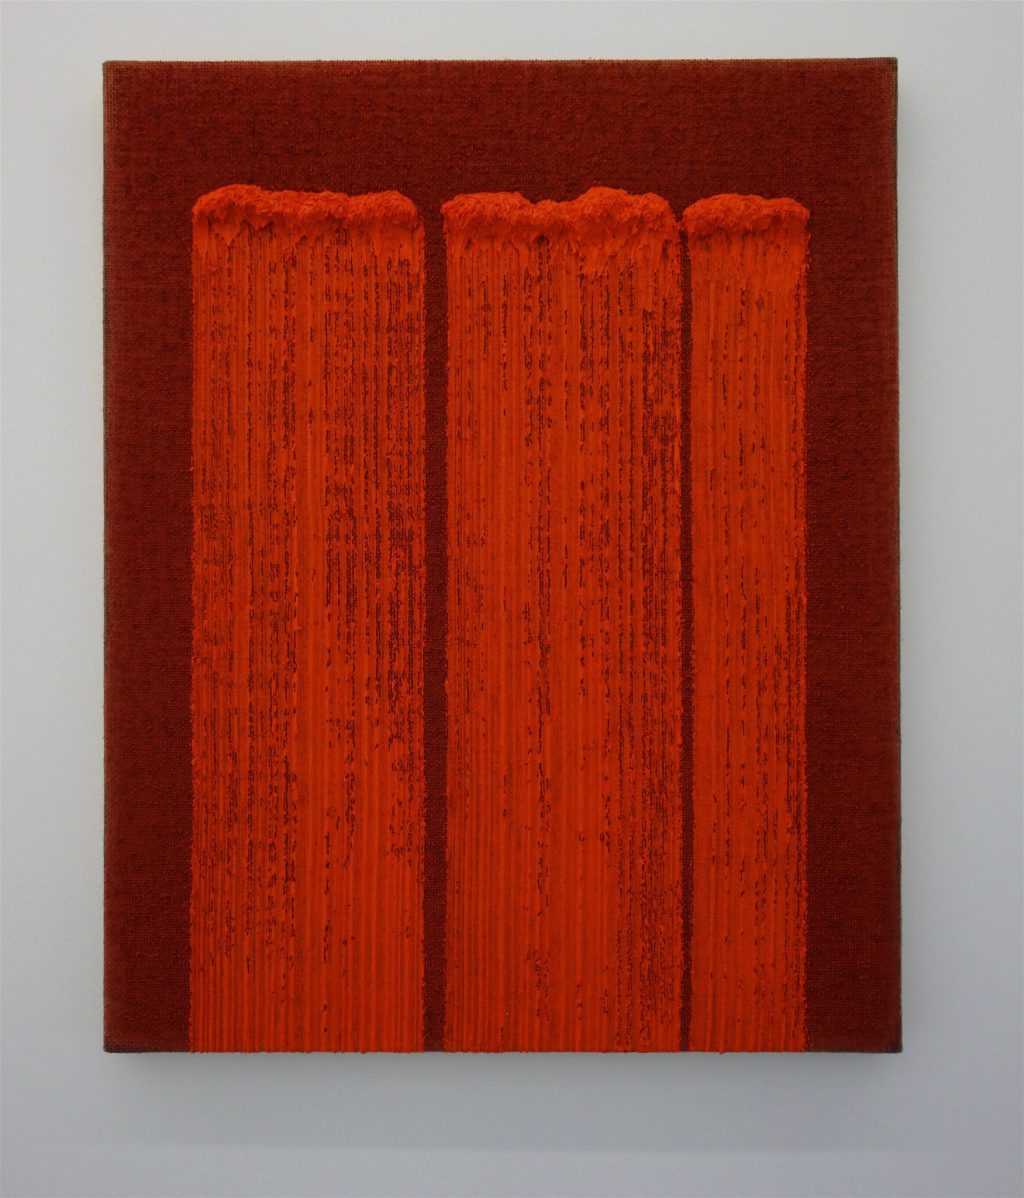 HA Chong-hyun ‘Conjunction 18-07’ 2018, Oil on hemp, 91 x 73 cm